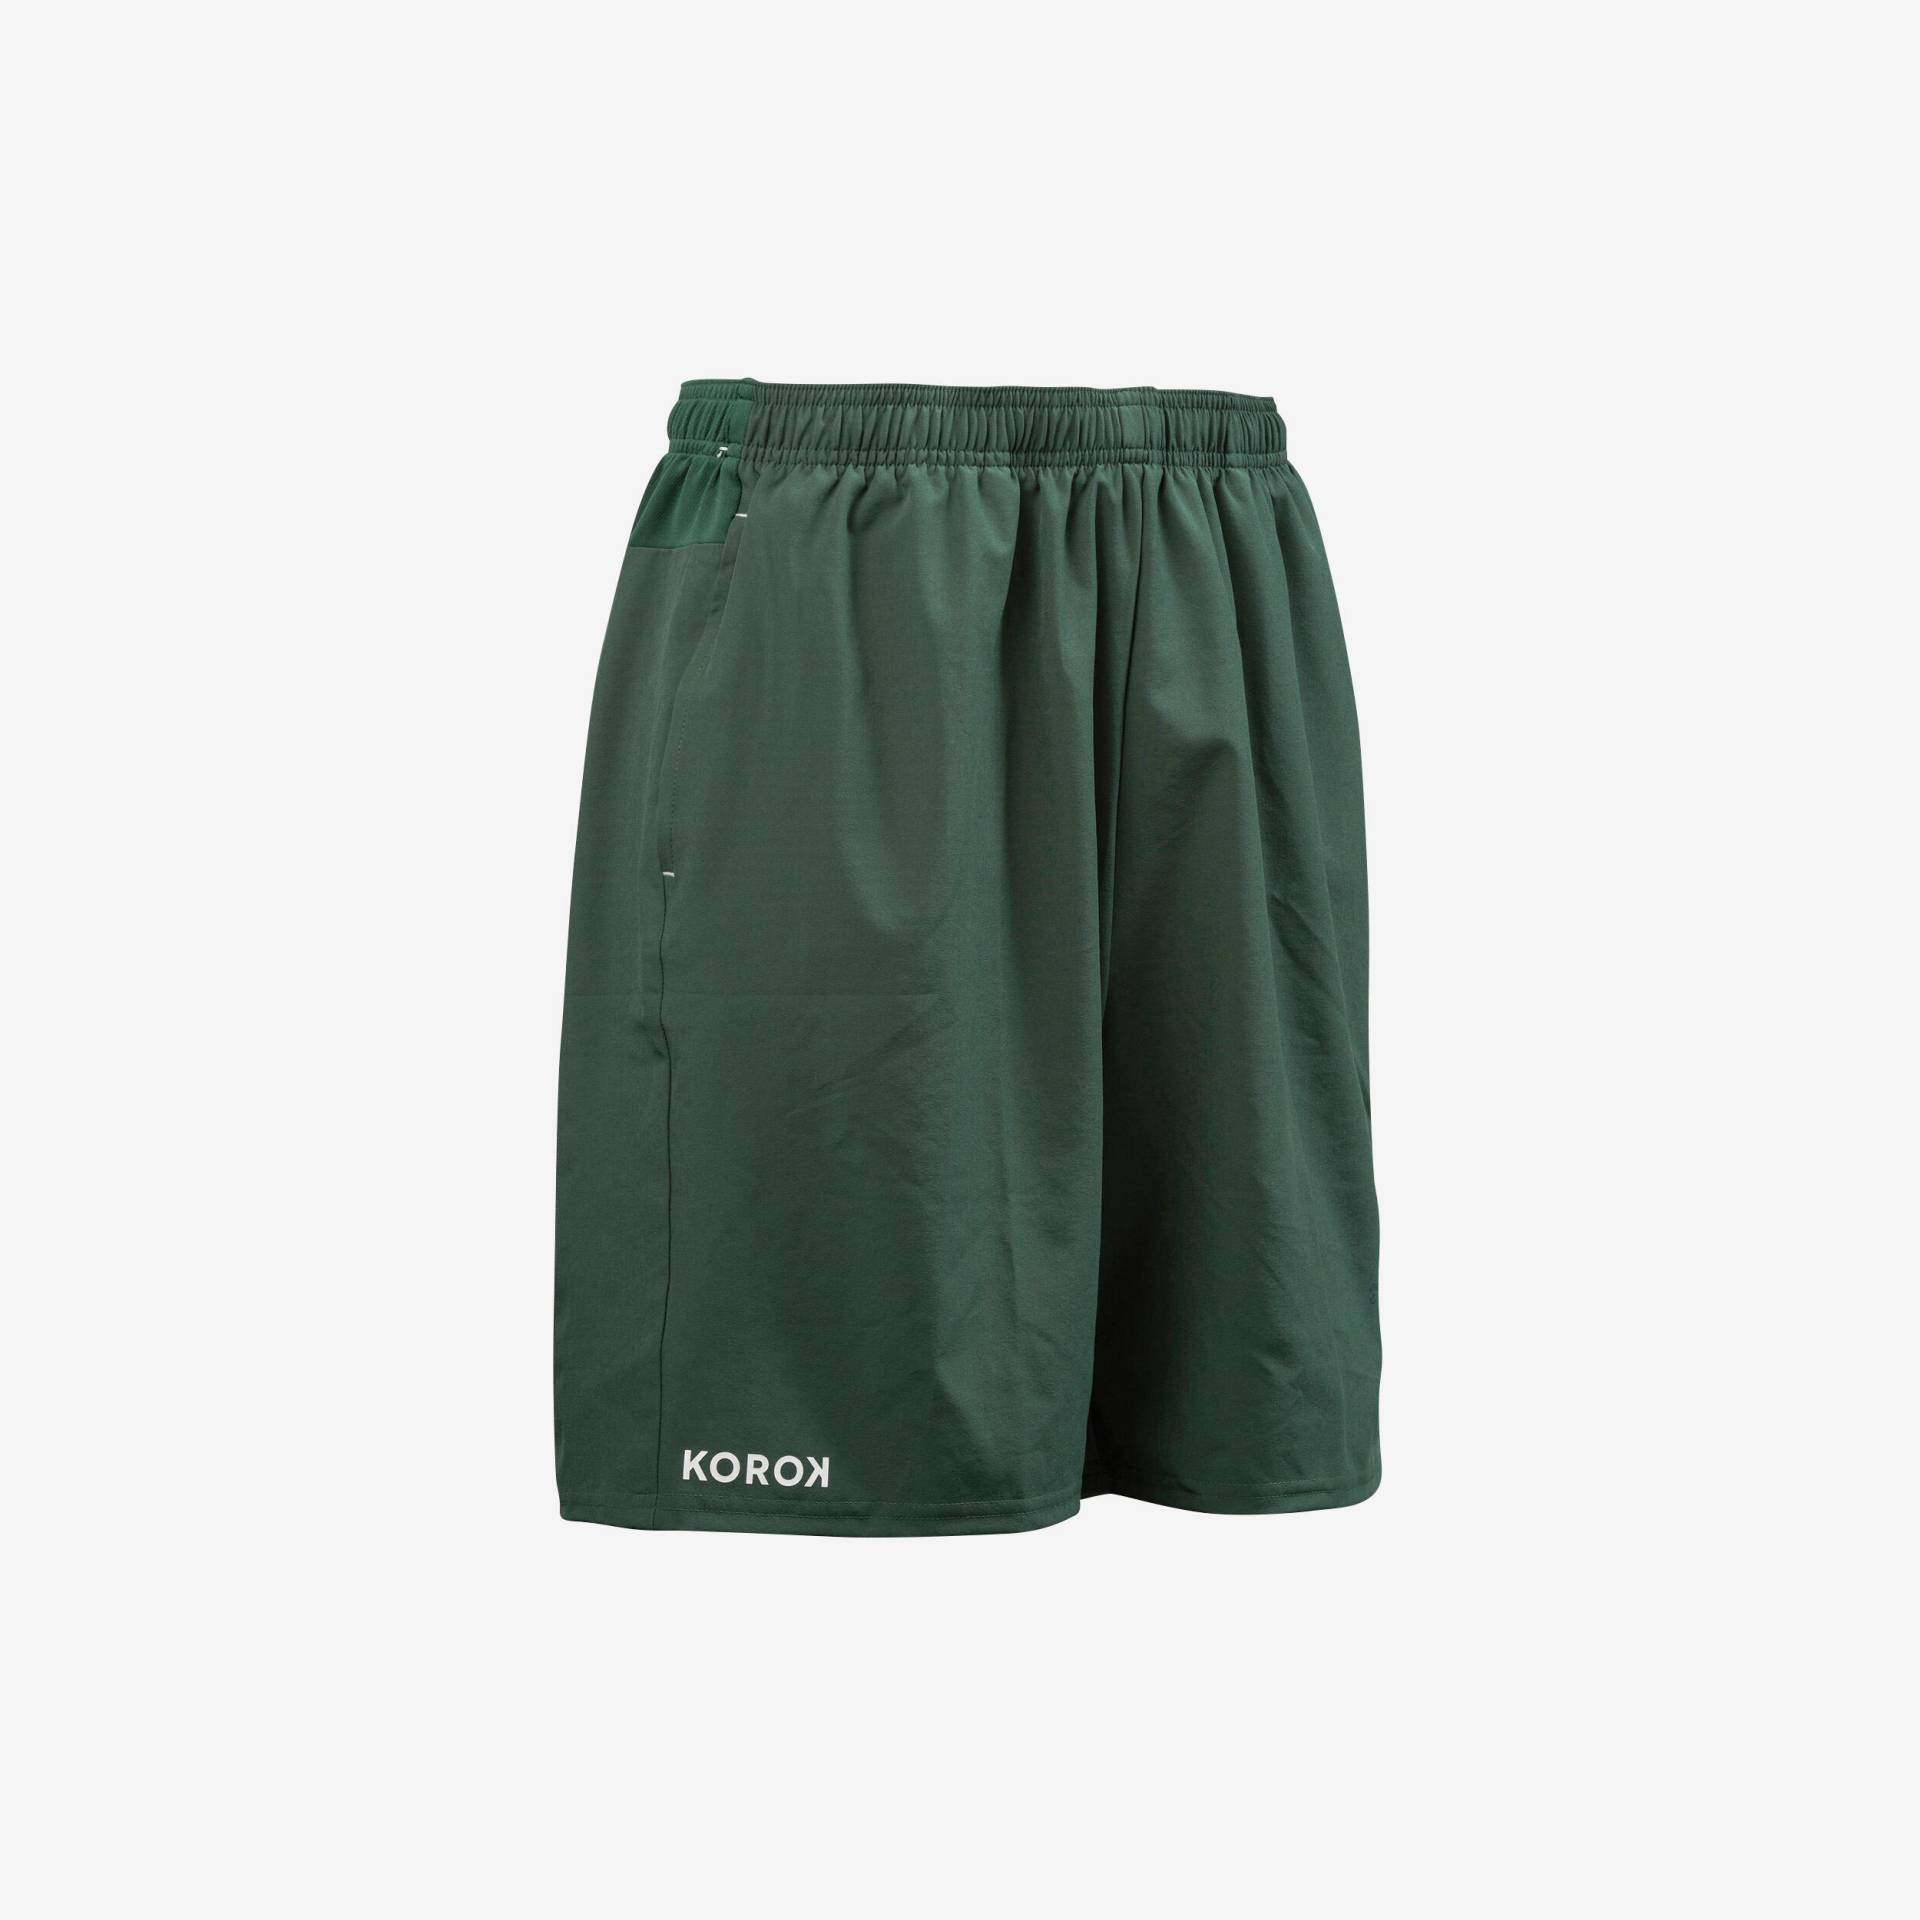 Damen/Herren Feldhockey Shorts - FH500 grün von KOROK